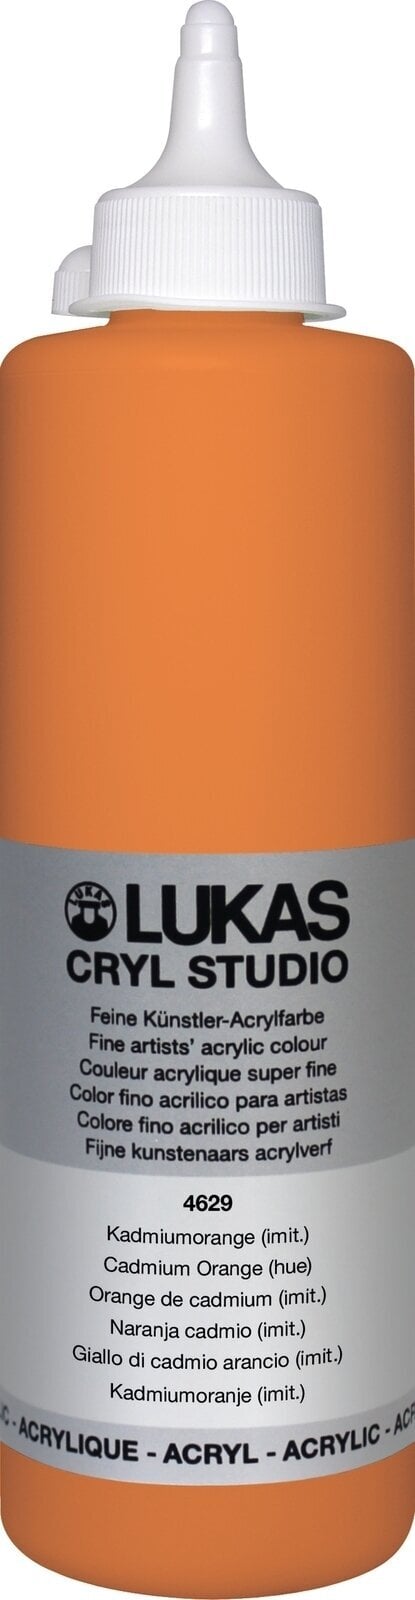 Akryylimaali Lukas Cryl Studio Plastic Bottle Akryylimaali Cadmium Orange Hue 500 ml 1 kpl